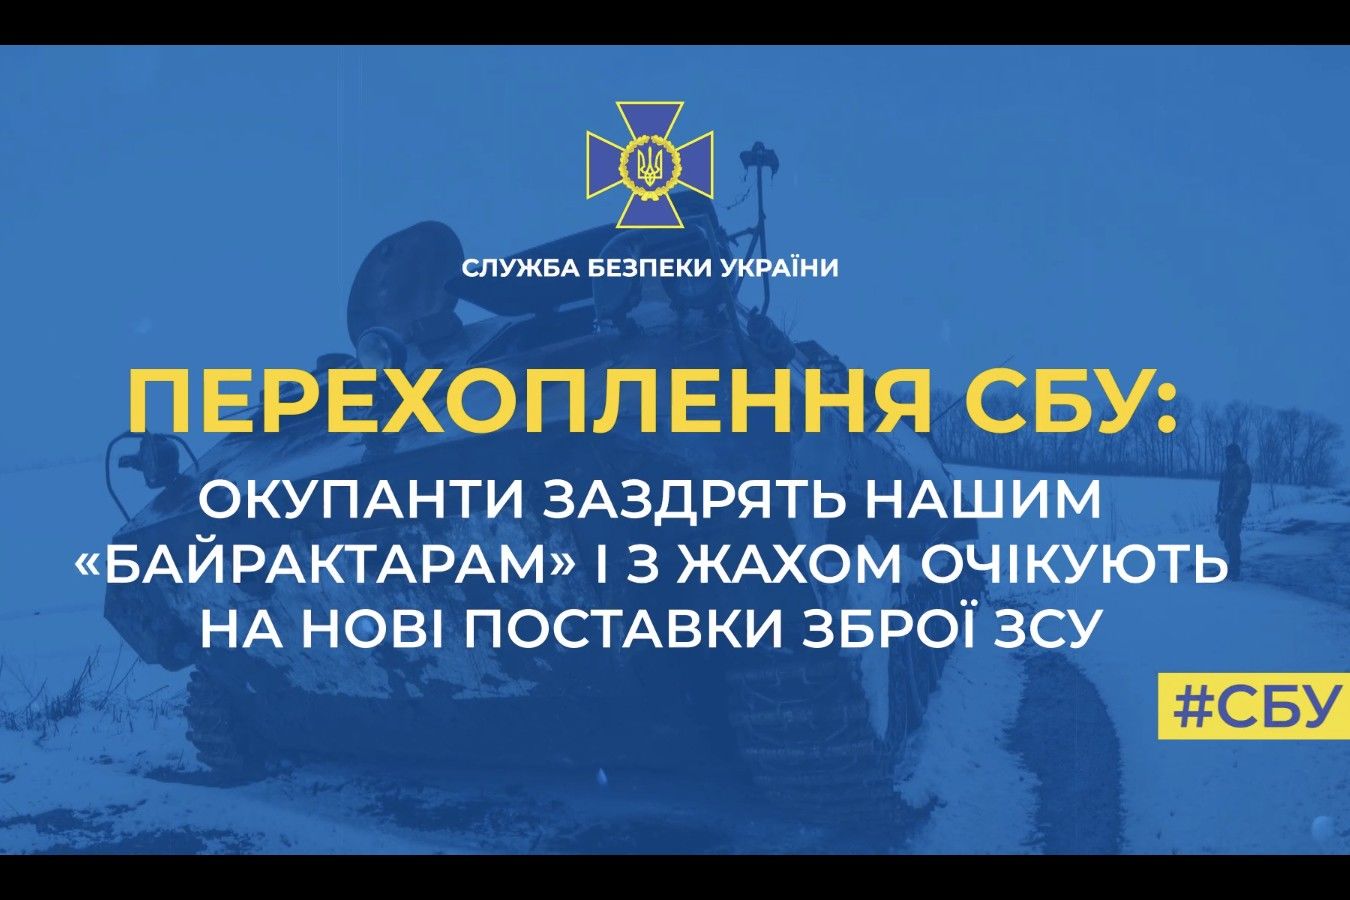 ​Оккупанты РФ завидуют ВСУ из-за Bayraktar и ленд-лиза: "Нам будет скоро жо*а", – перехват